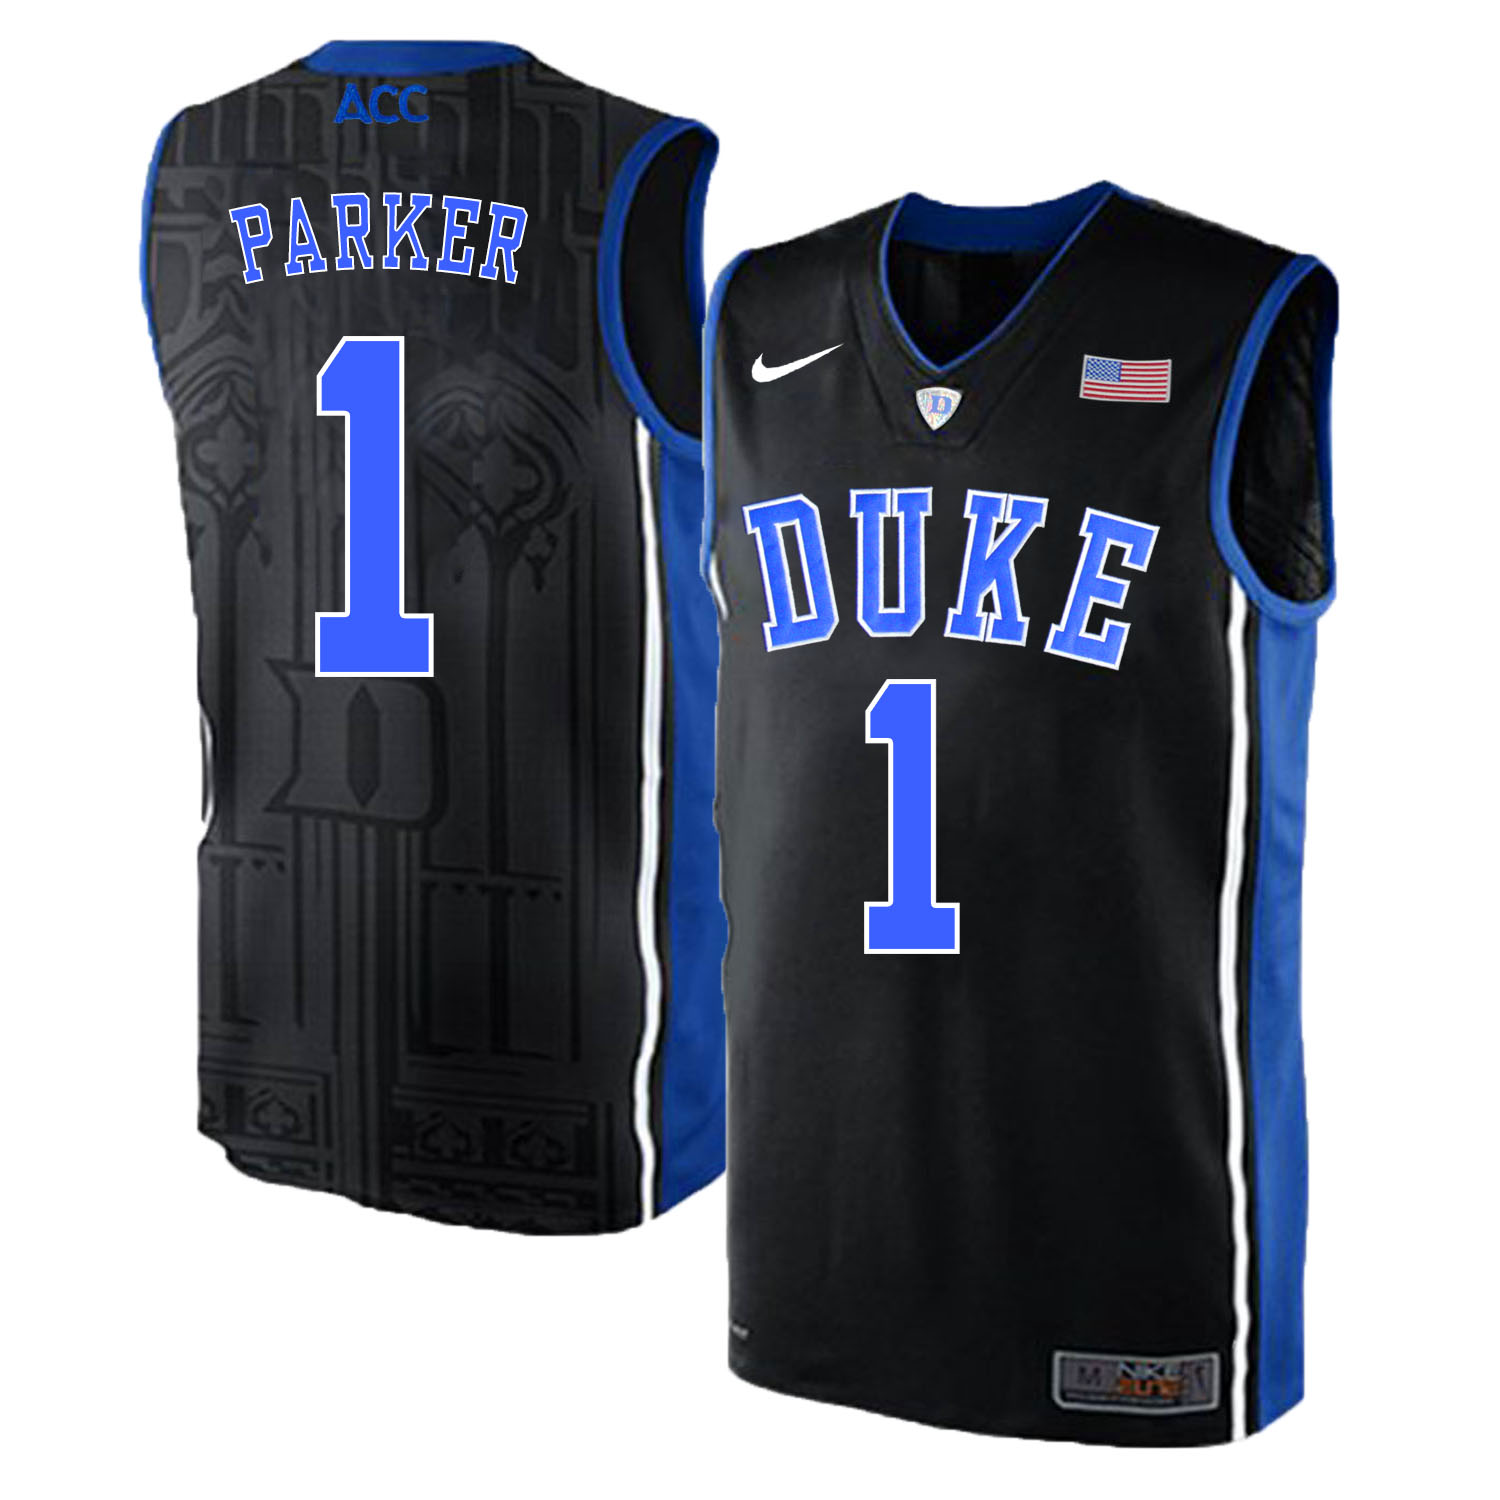 Duke Blue Devils 1 Jabari Parker Black Elite Nike College Basketabll Jersey